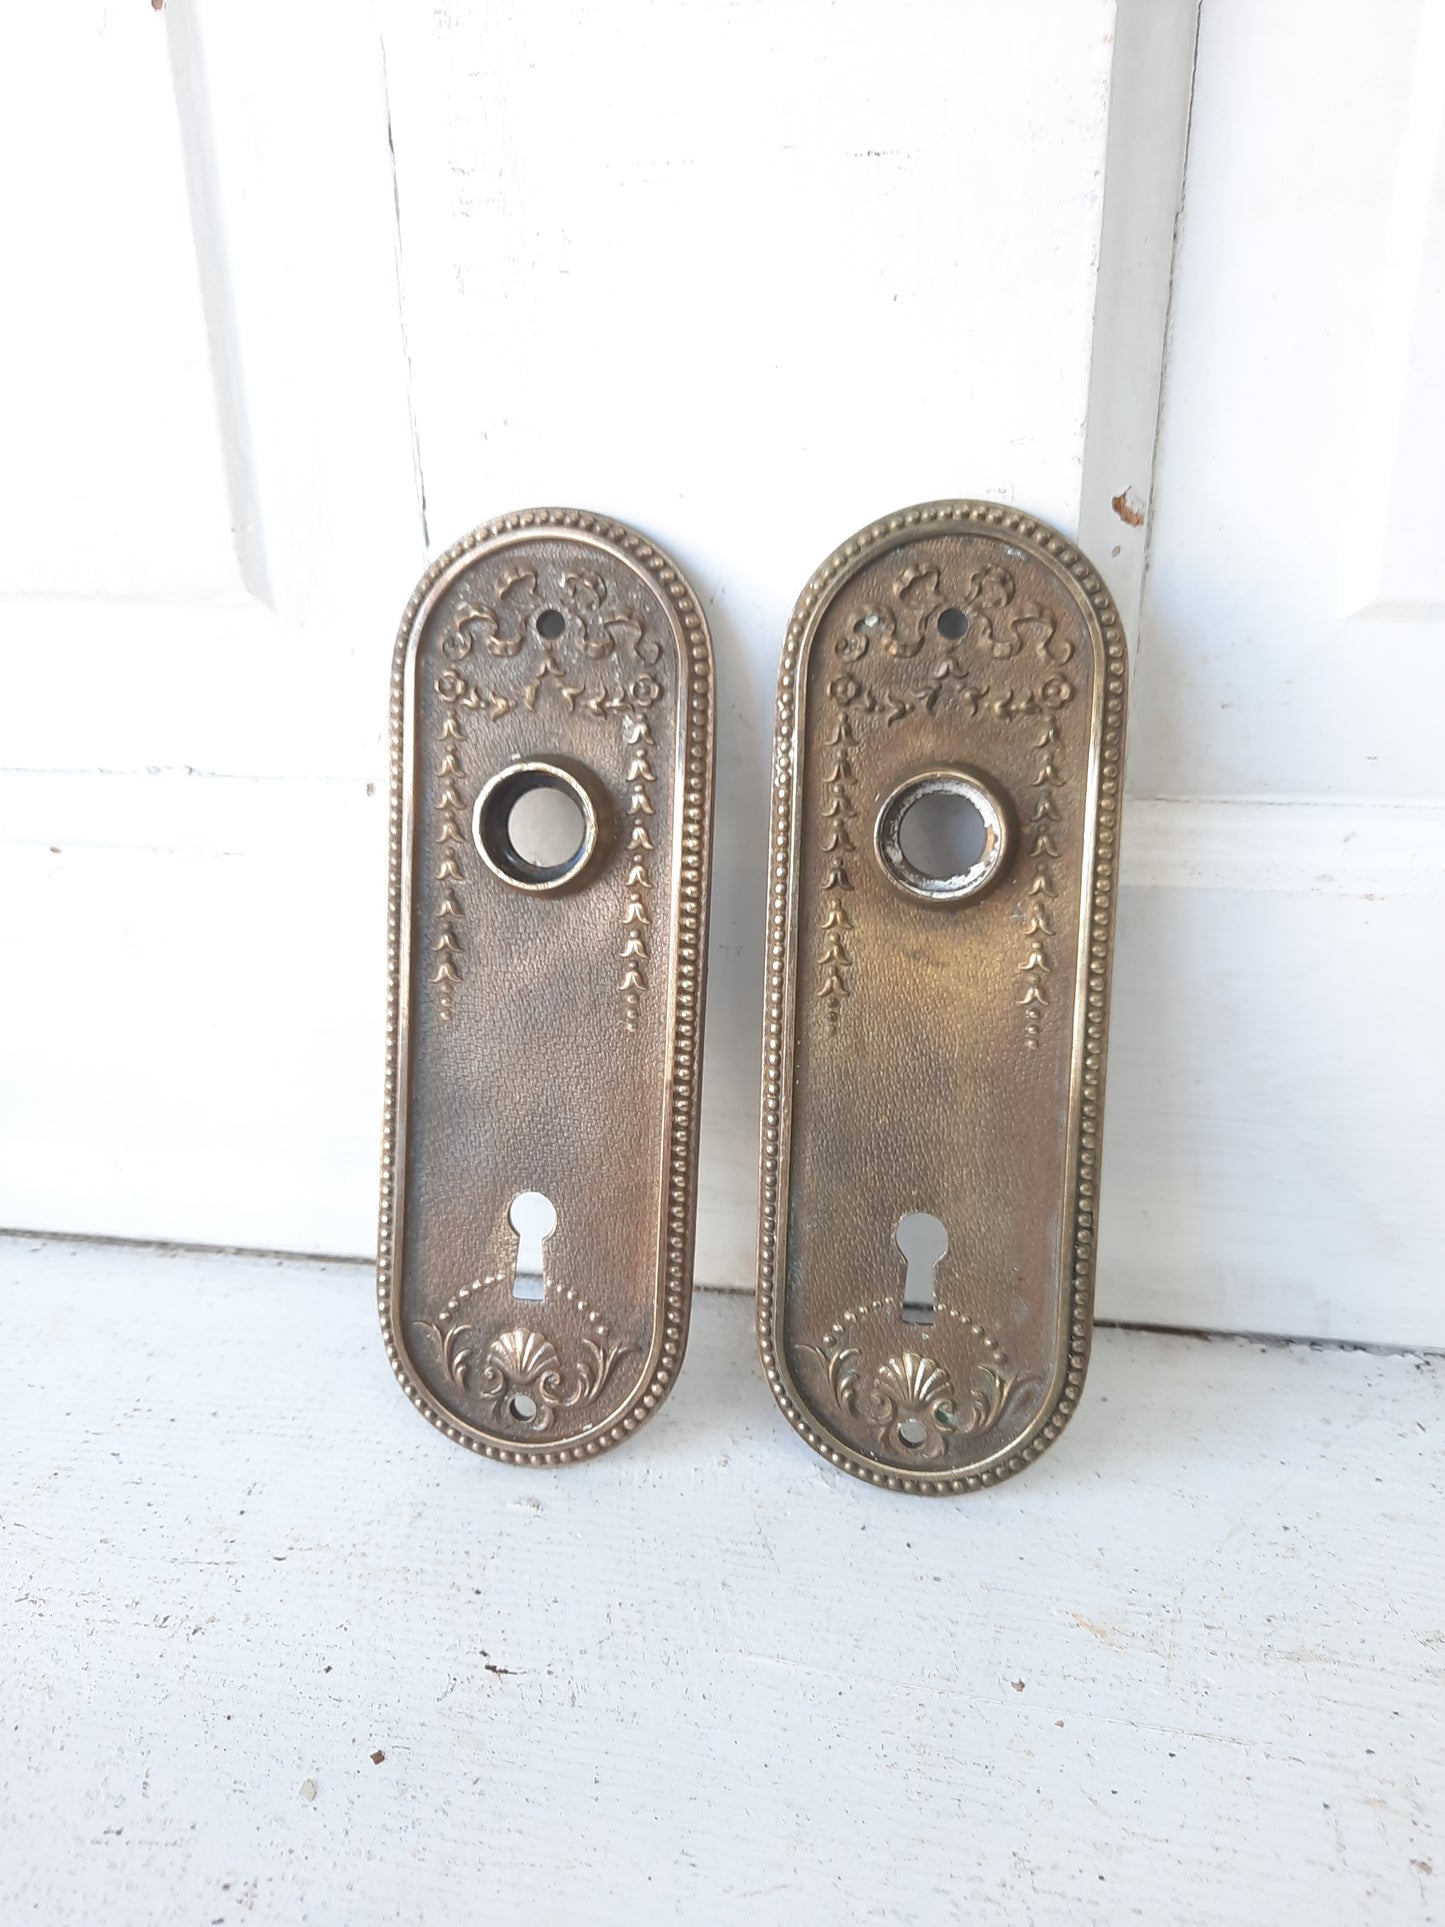 Pair of Oval Bronze Doorknob Backplates with Floral Design, Antique Knob Escutcheons 101006